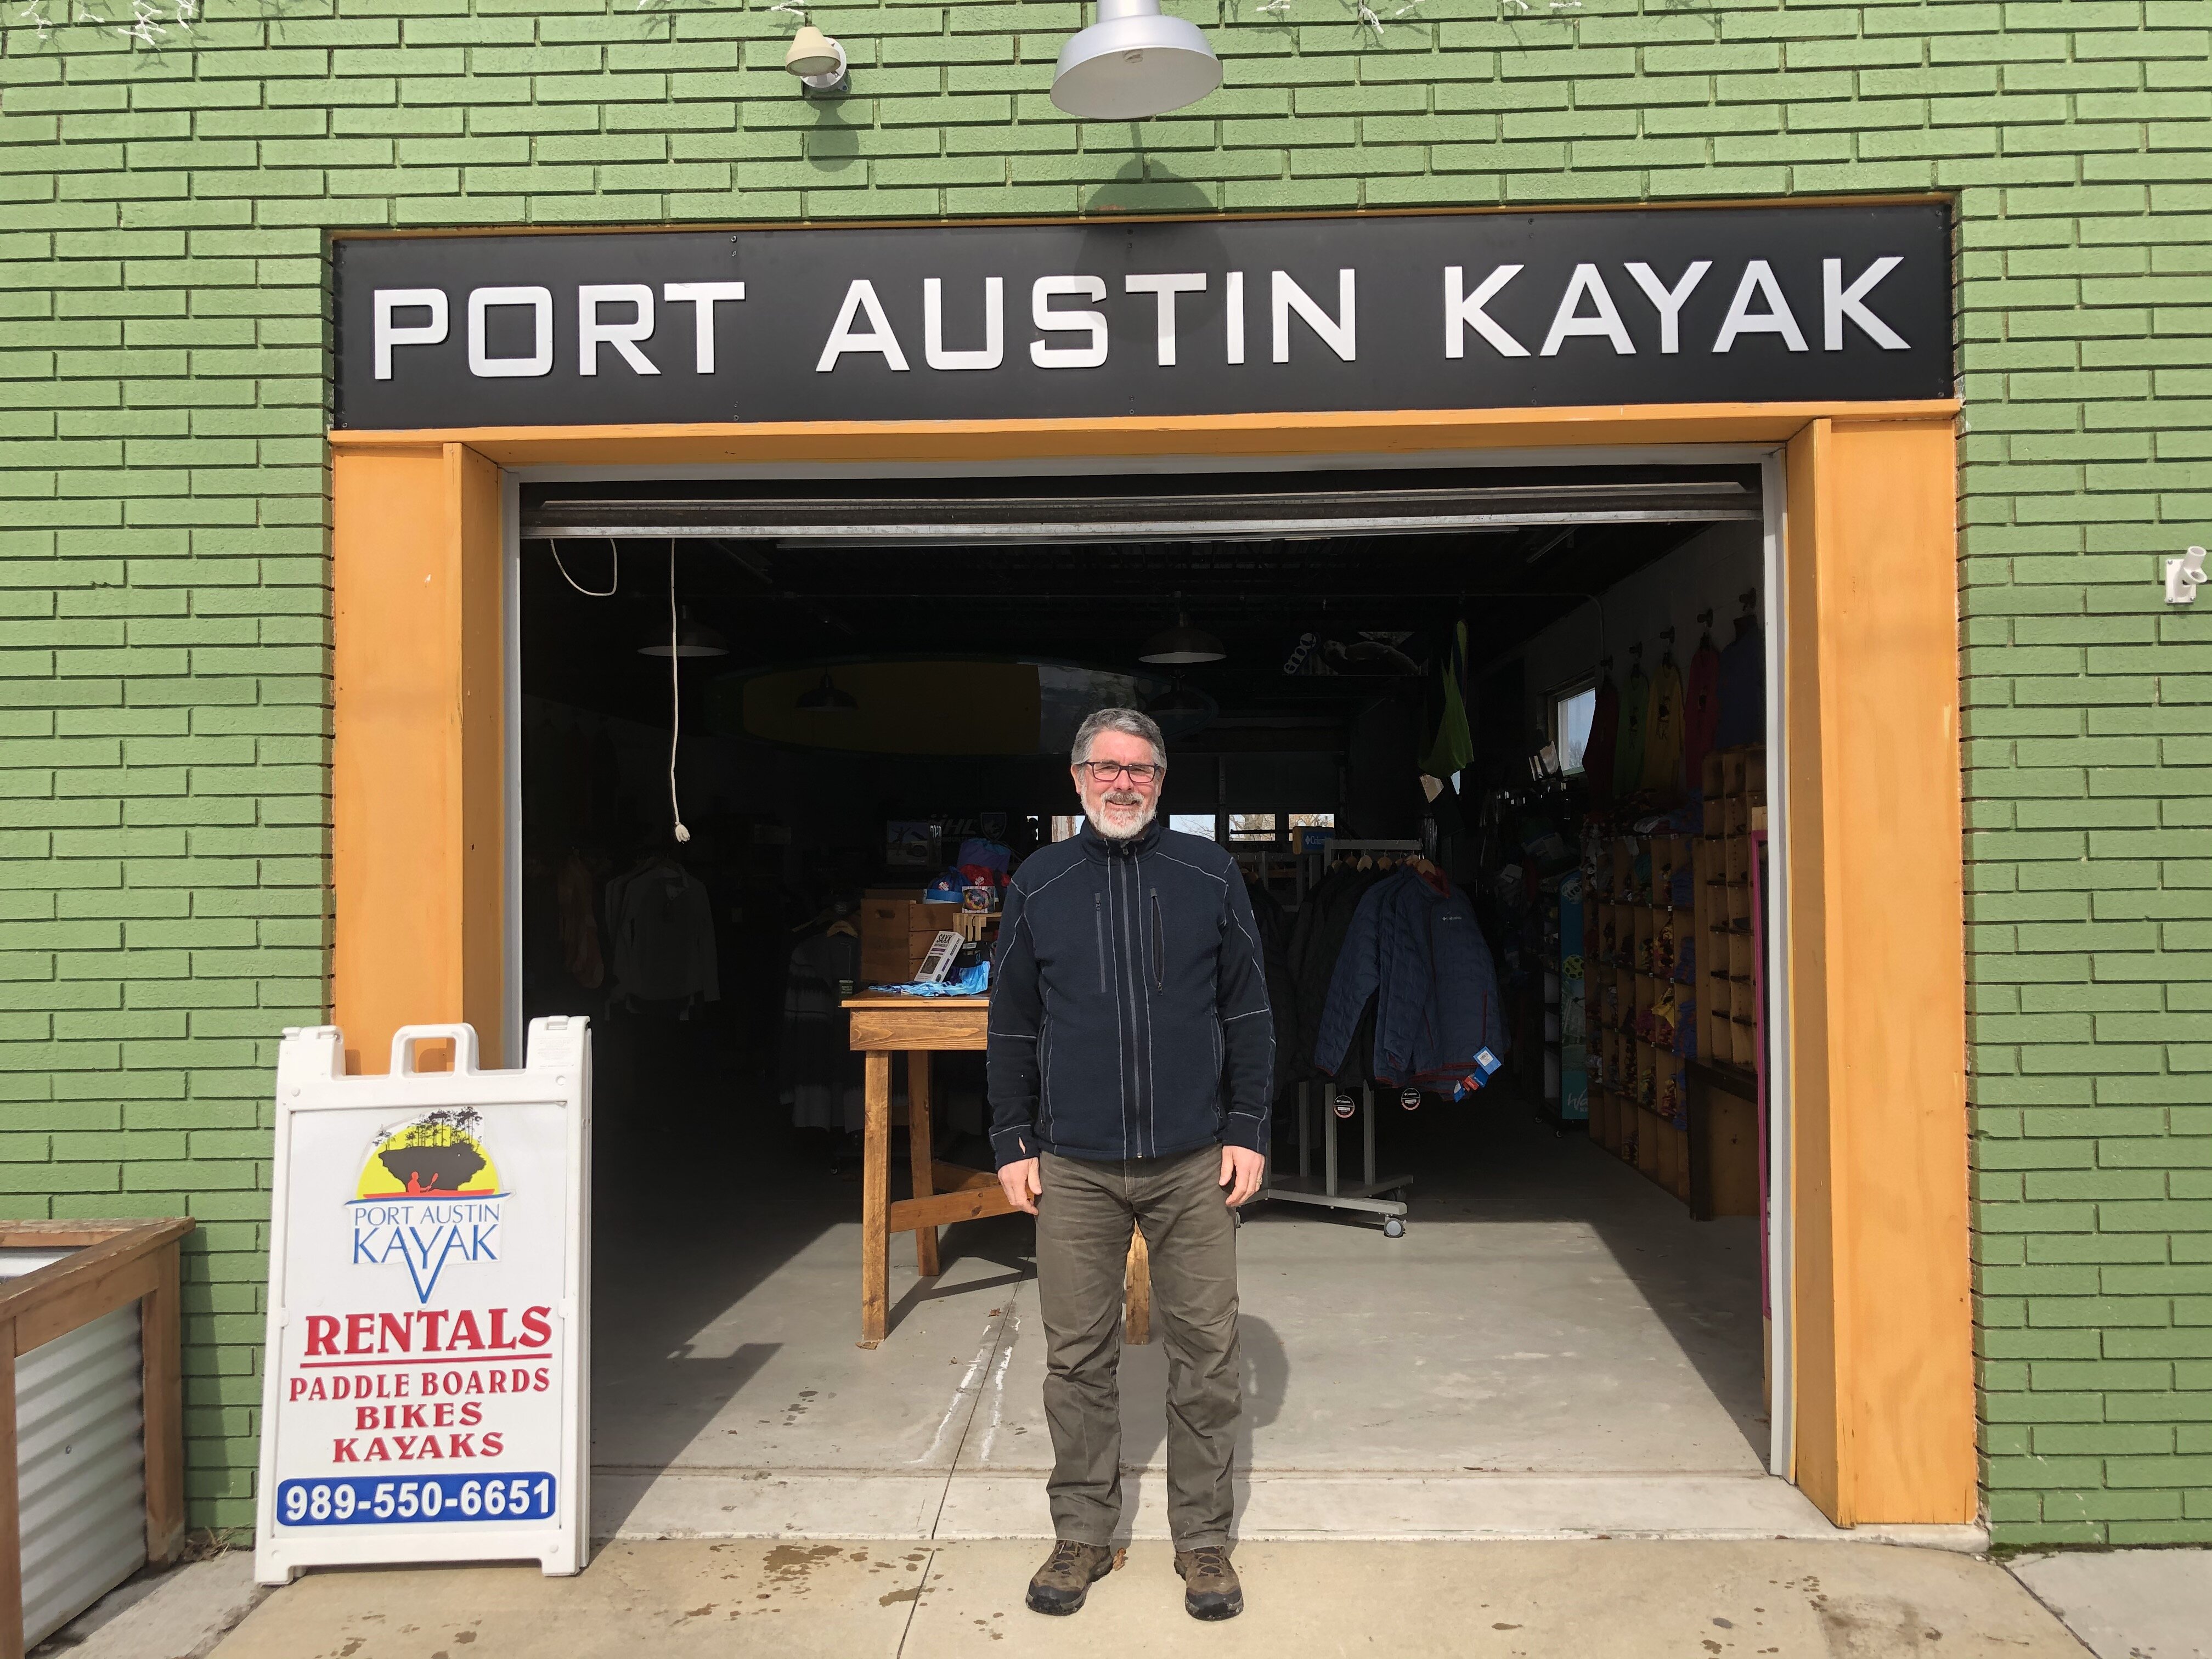 Entrepreneur Chris Boyle poses outside his first Port Austin venture: Port Austin Kayak.